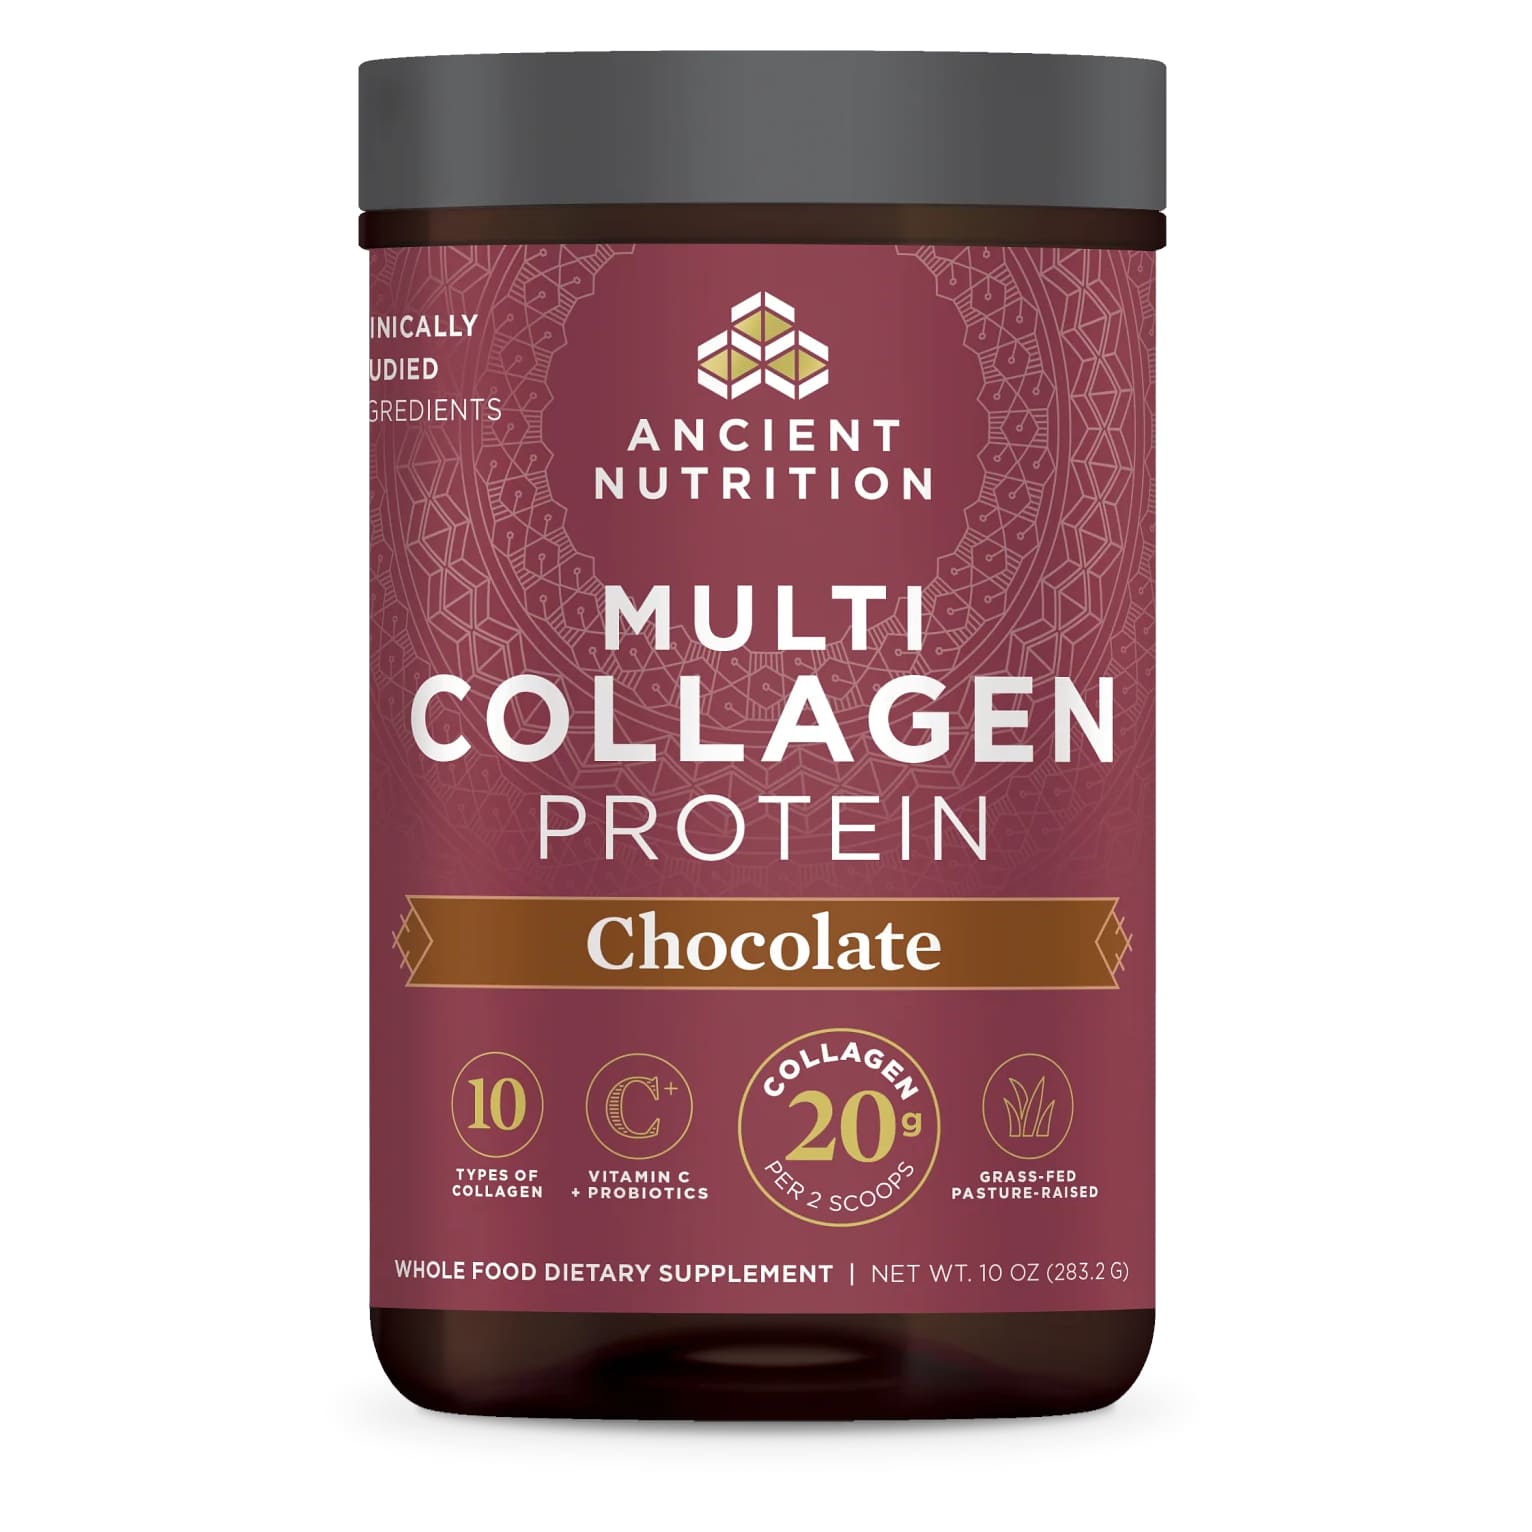 Коллаген Ancient Nutrition Multi Protein 10 Types Vitamin C + Probiotics Chocolate, 283,2 г биологически активная добавка beguana коллаген 180 гр